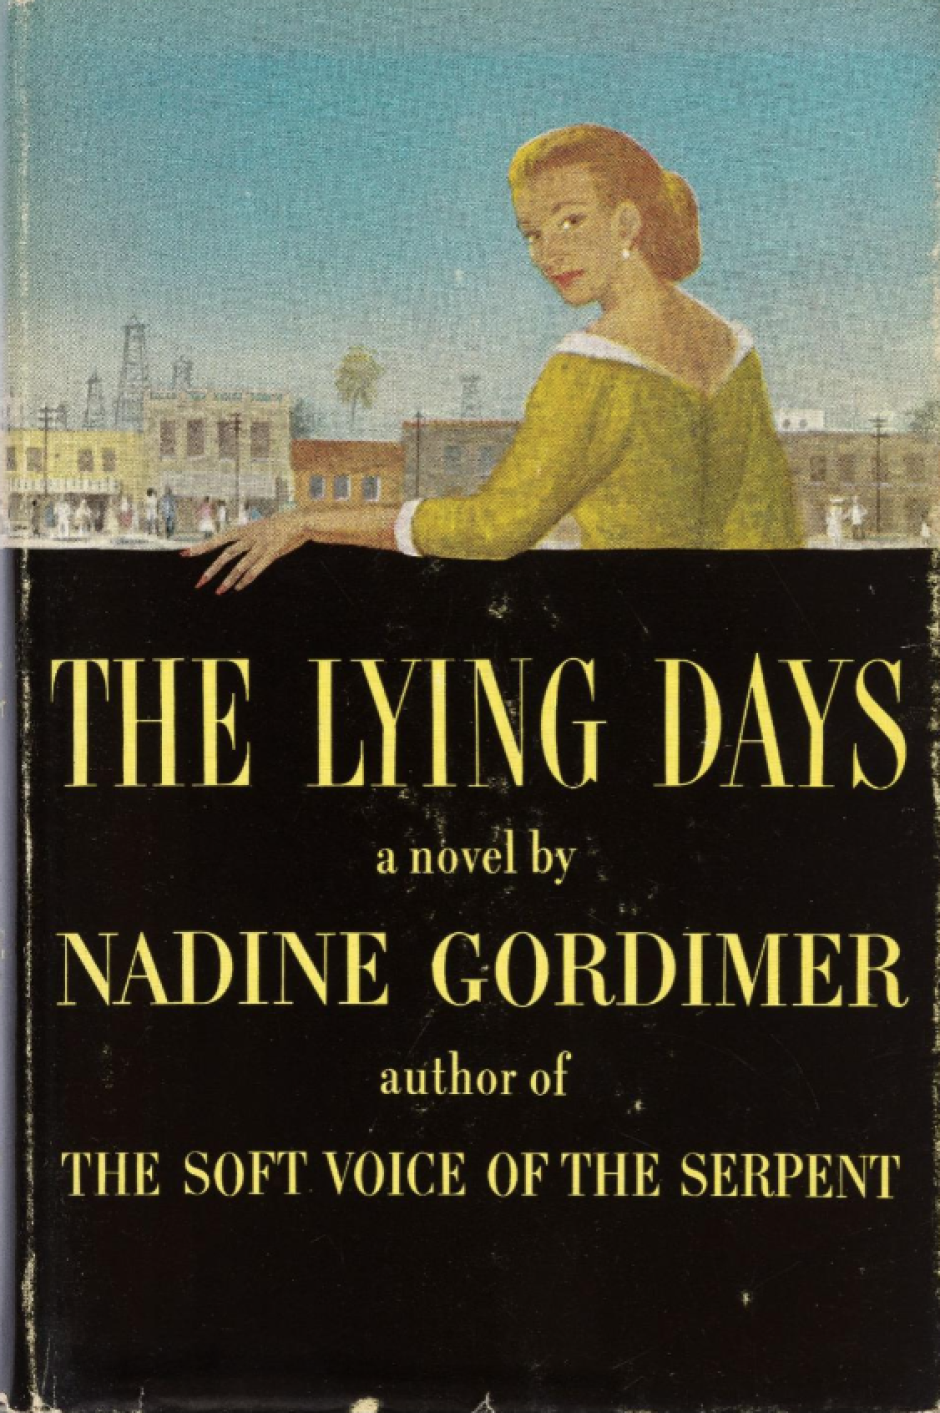 The lying days (1953)